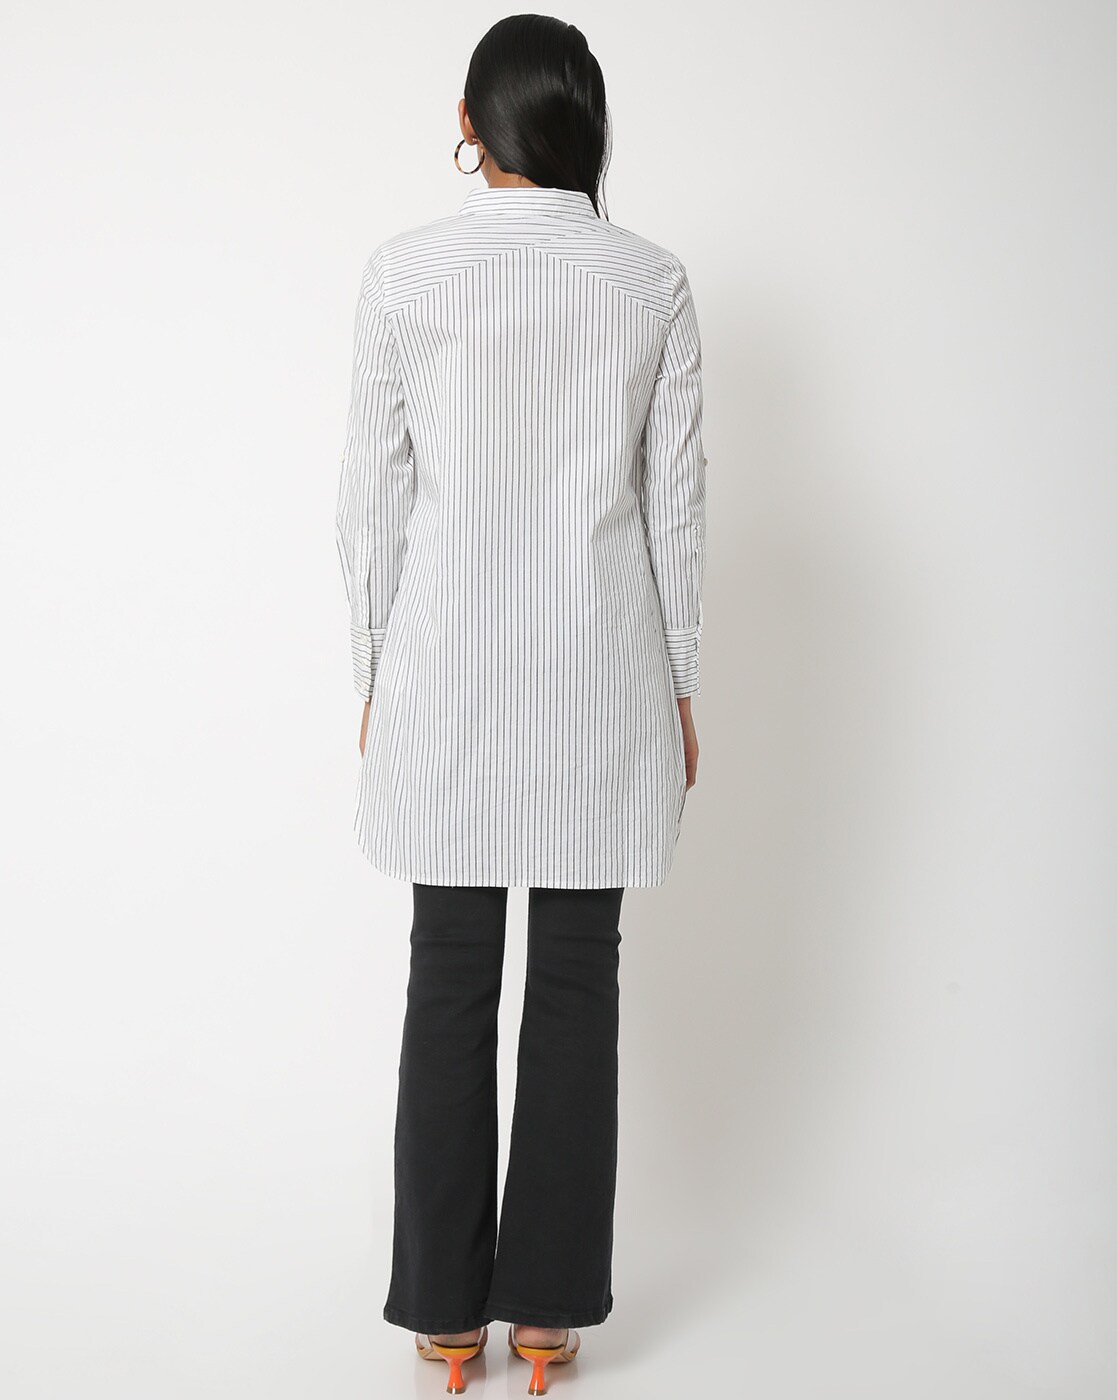 Vero moda Erika Stripe 3/4 Sleeve Shirt White